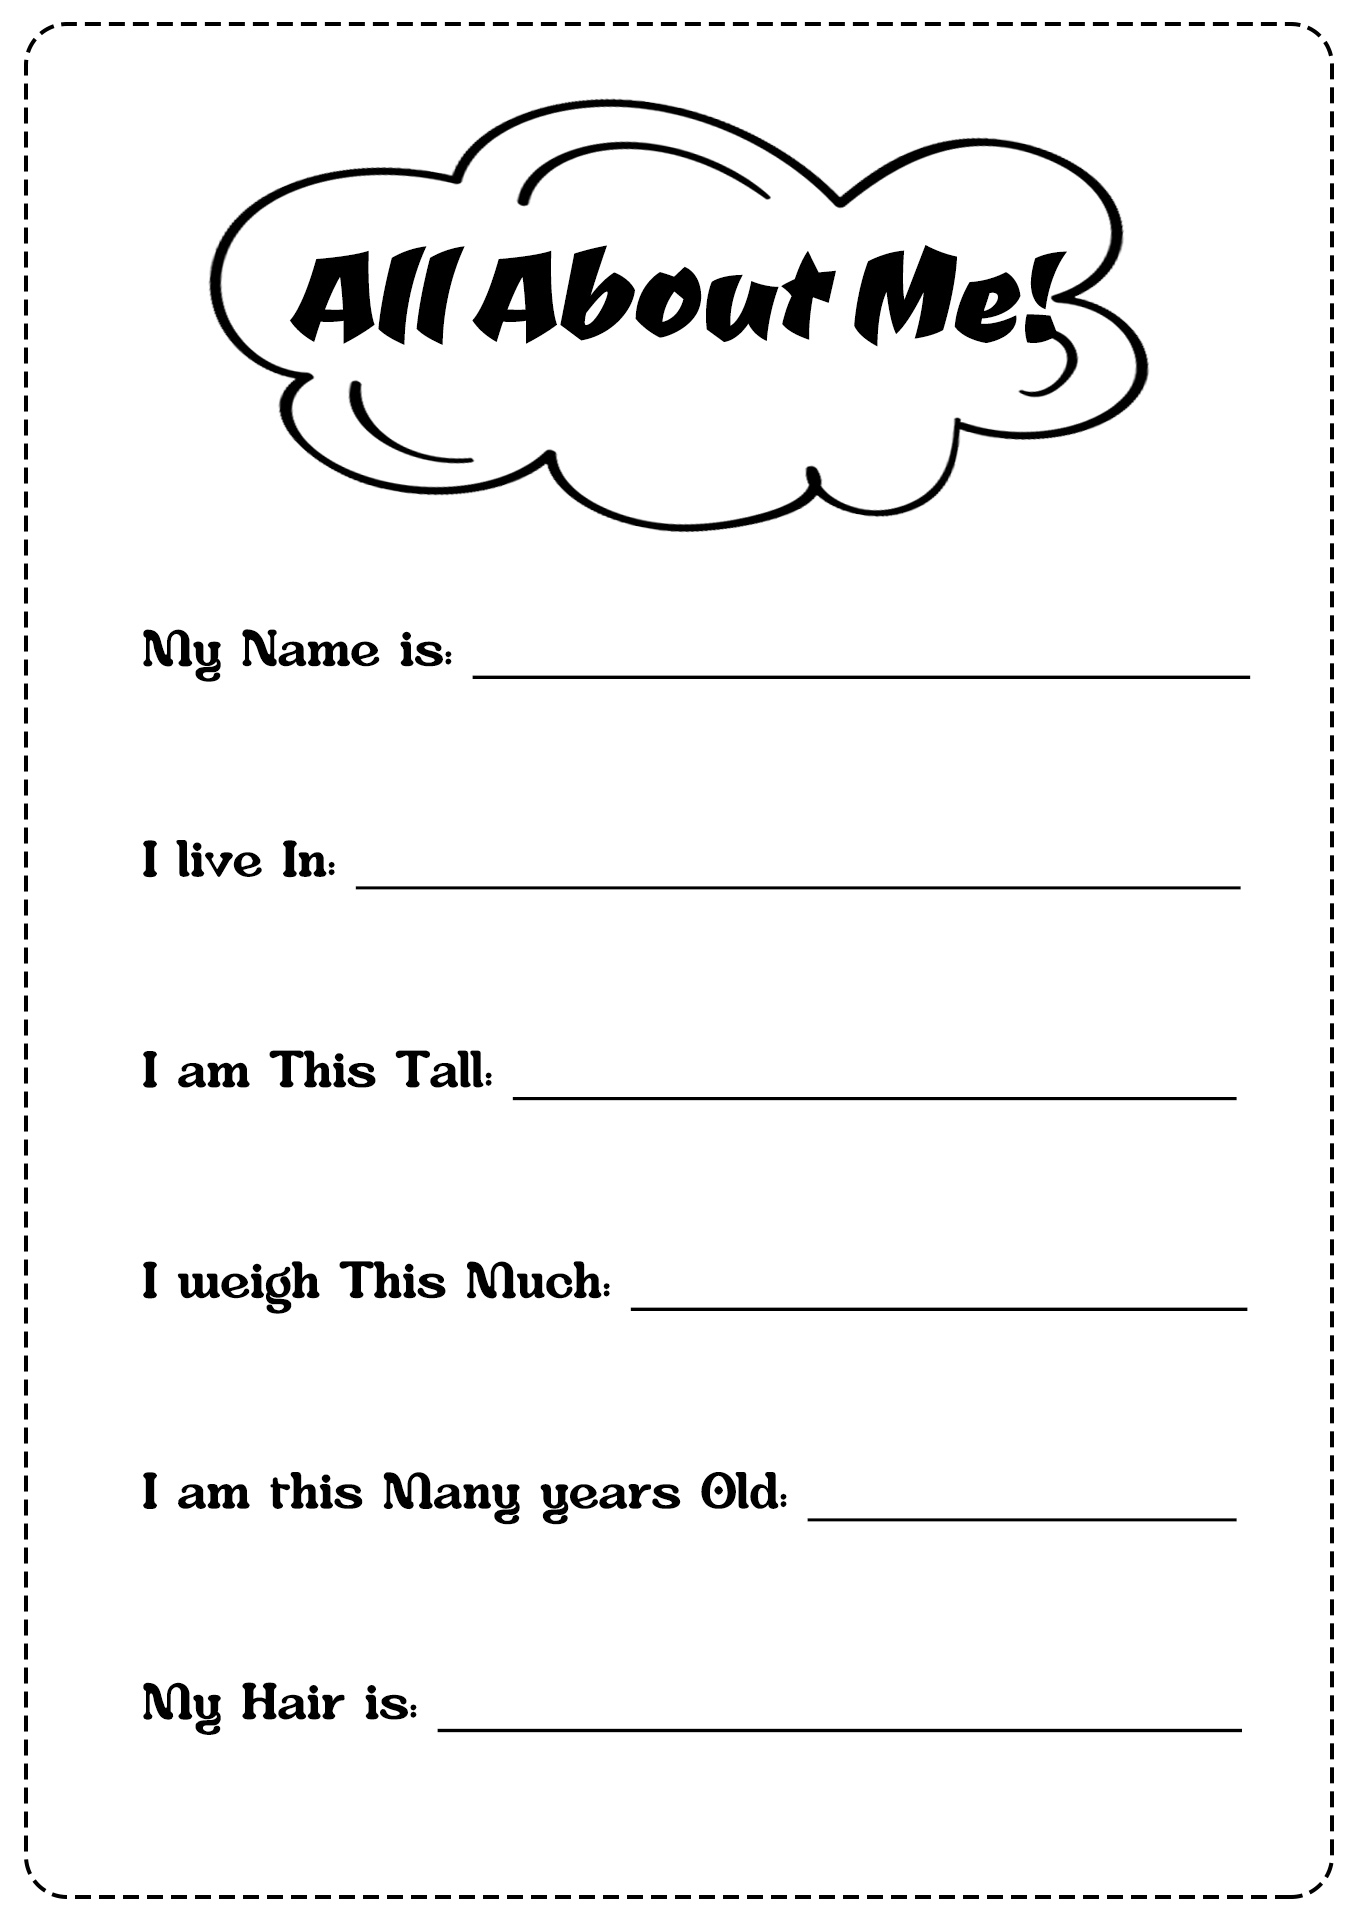 All About Me Preschool Worksheet Image